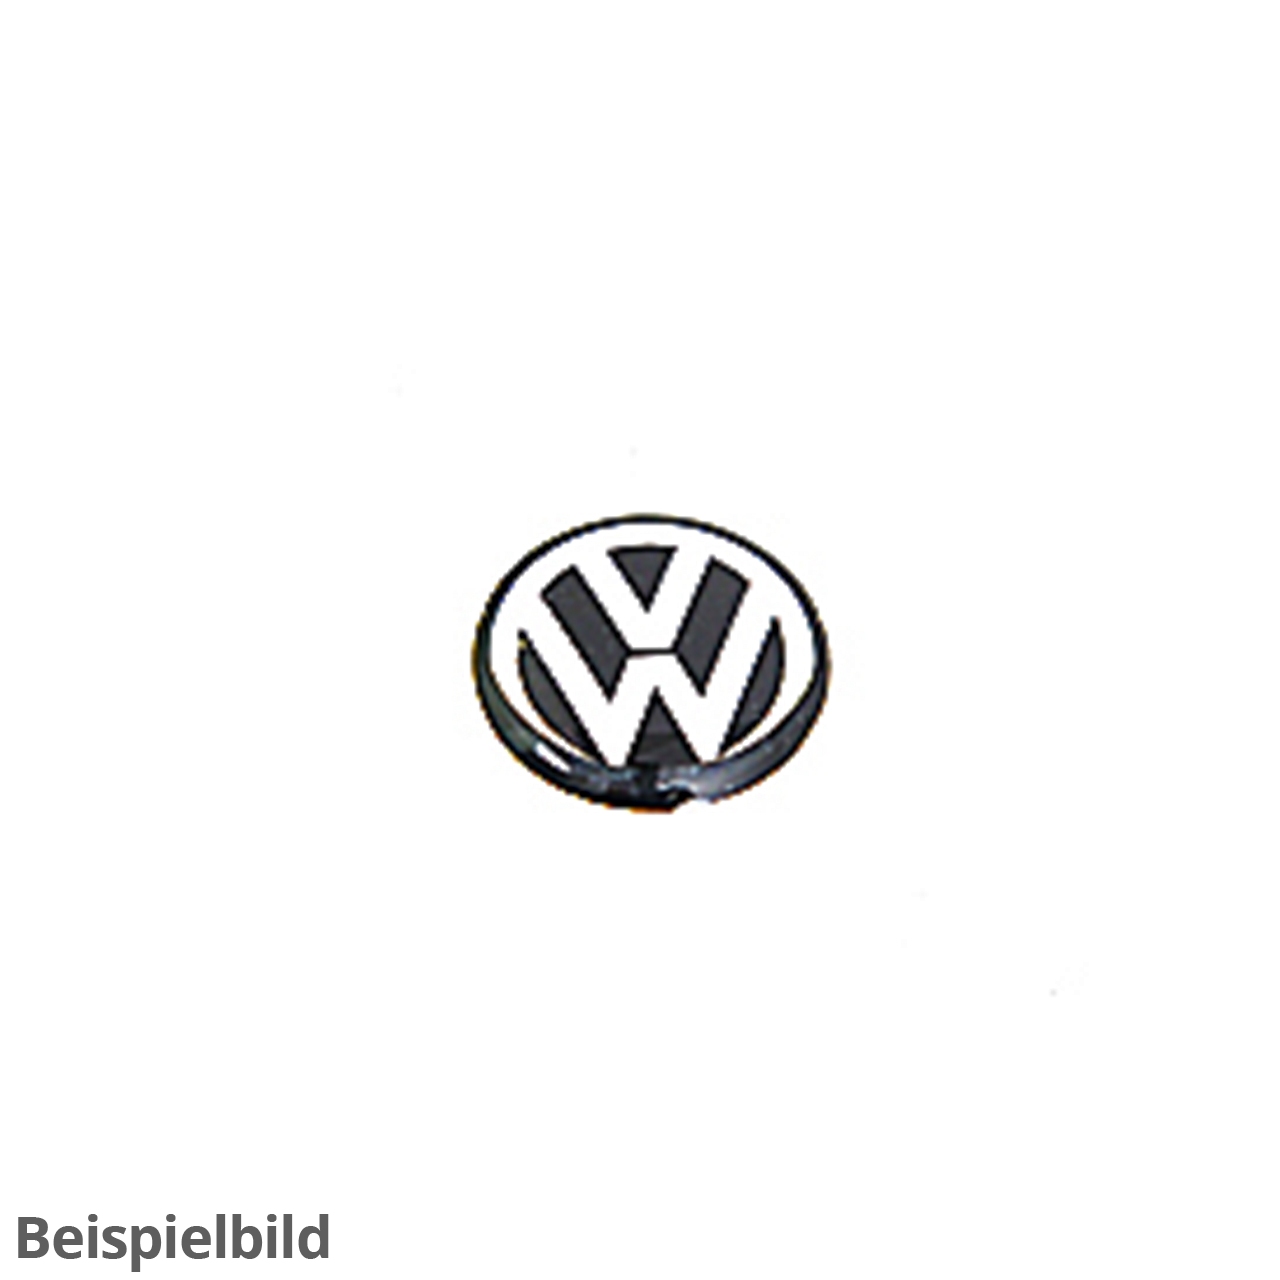  Volkswagen Emblem - 3B0-837-891-09Z : Automotive